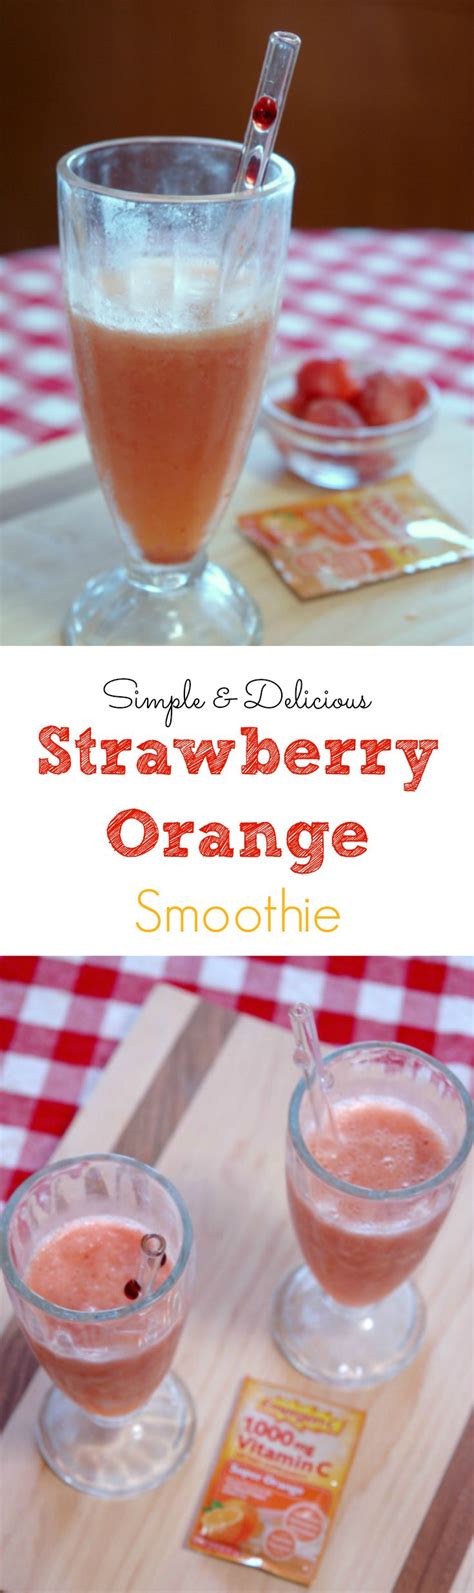 Strawberry Orange Smoothie Recipe Strawberry Orange Smoothie